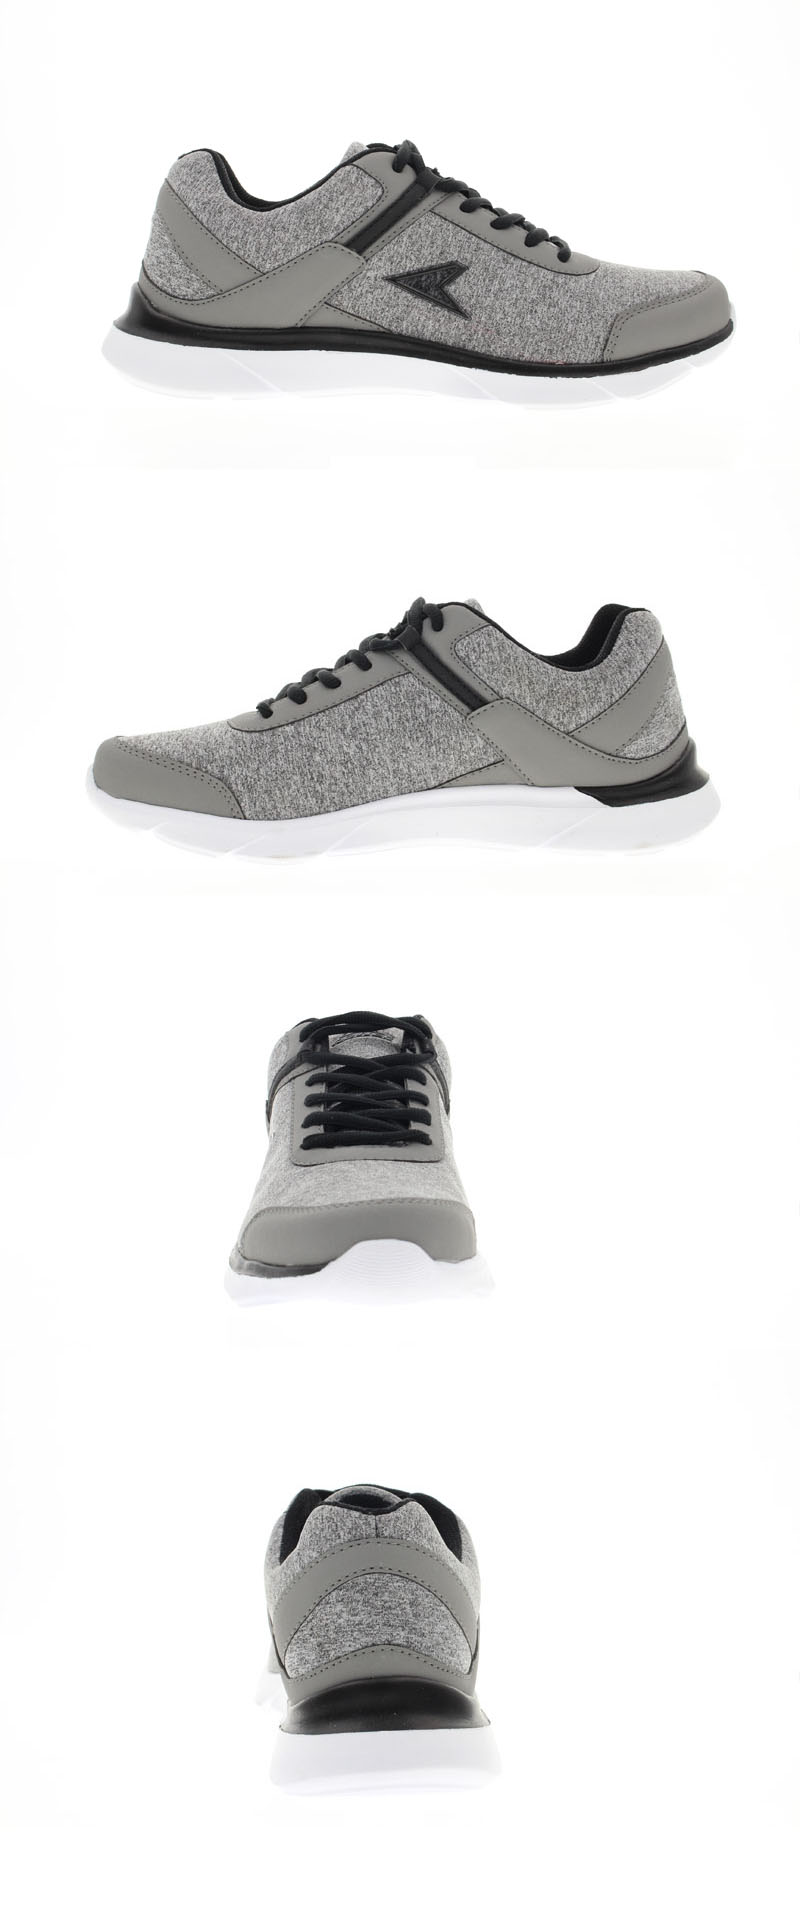 Grey white color mixture shoes 